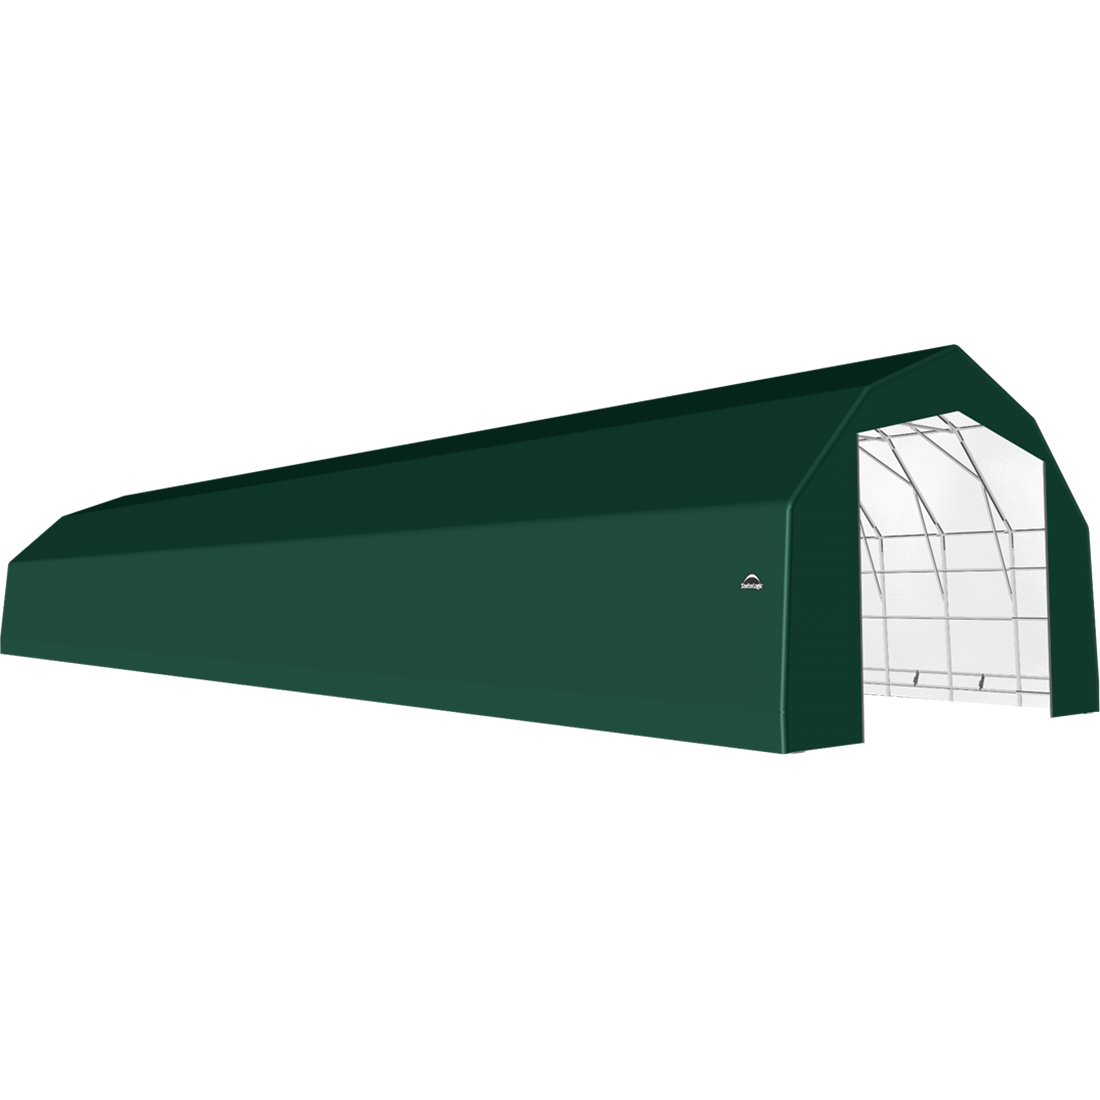 ShelterTech SP Series Barn Shelter, 25 ft. x 92 ft. x 17 ft. Heavy Duty PVC 14.5 oz. Green